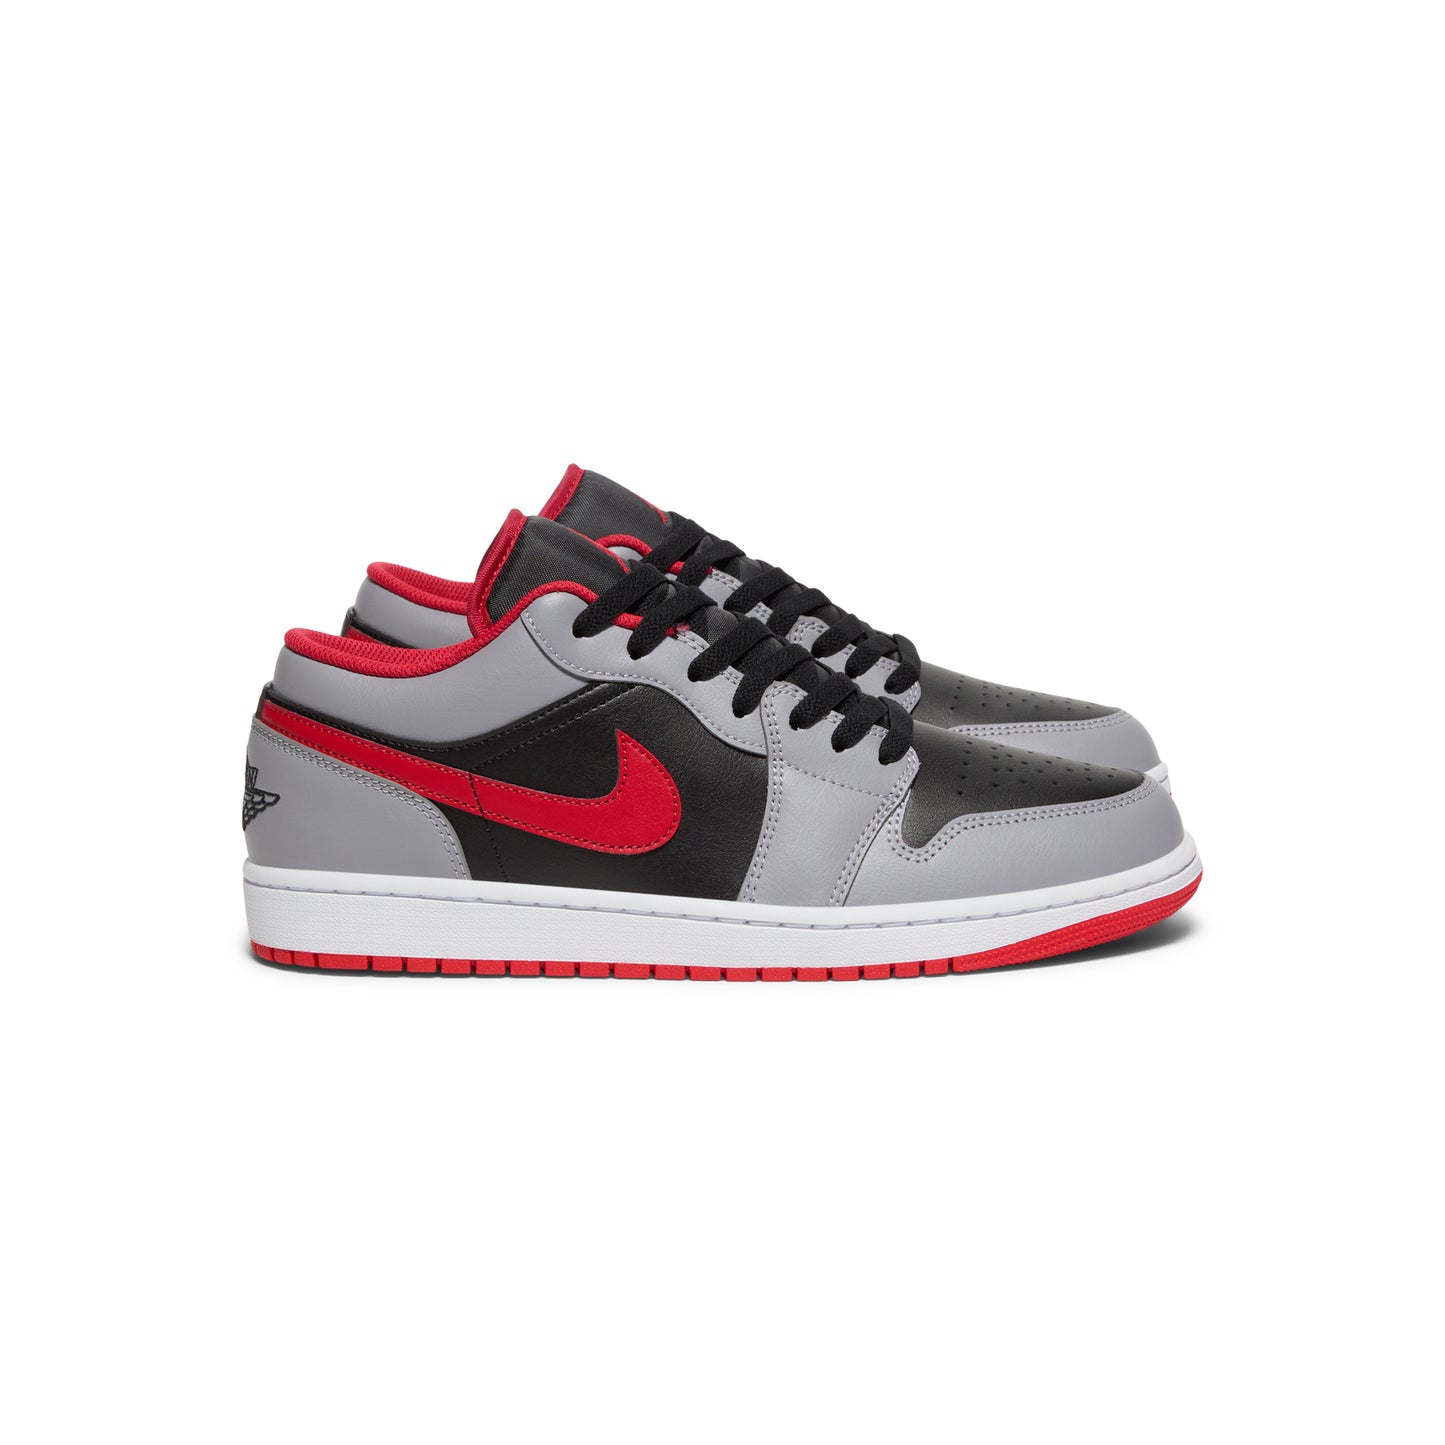 Nike Air Jordan 1 Low (Black/Fire Red/Cement Grey/White)